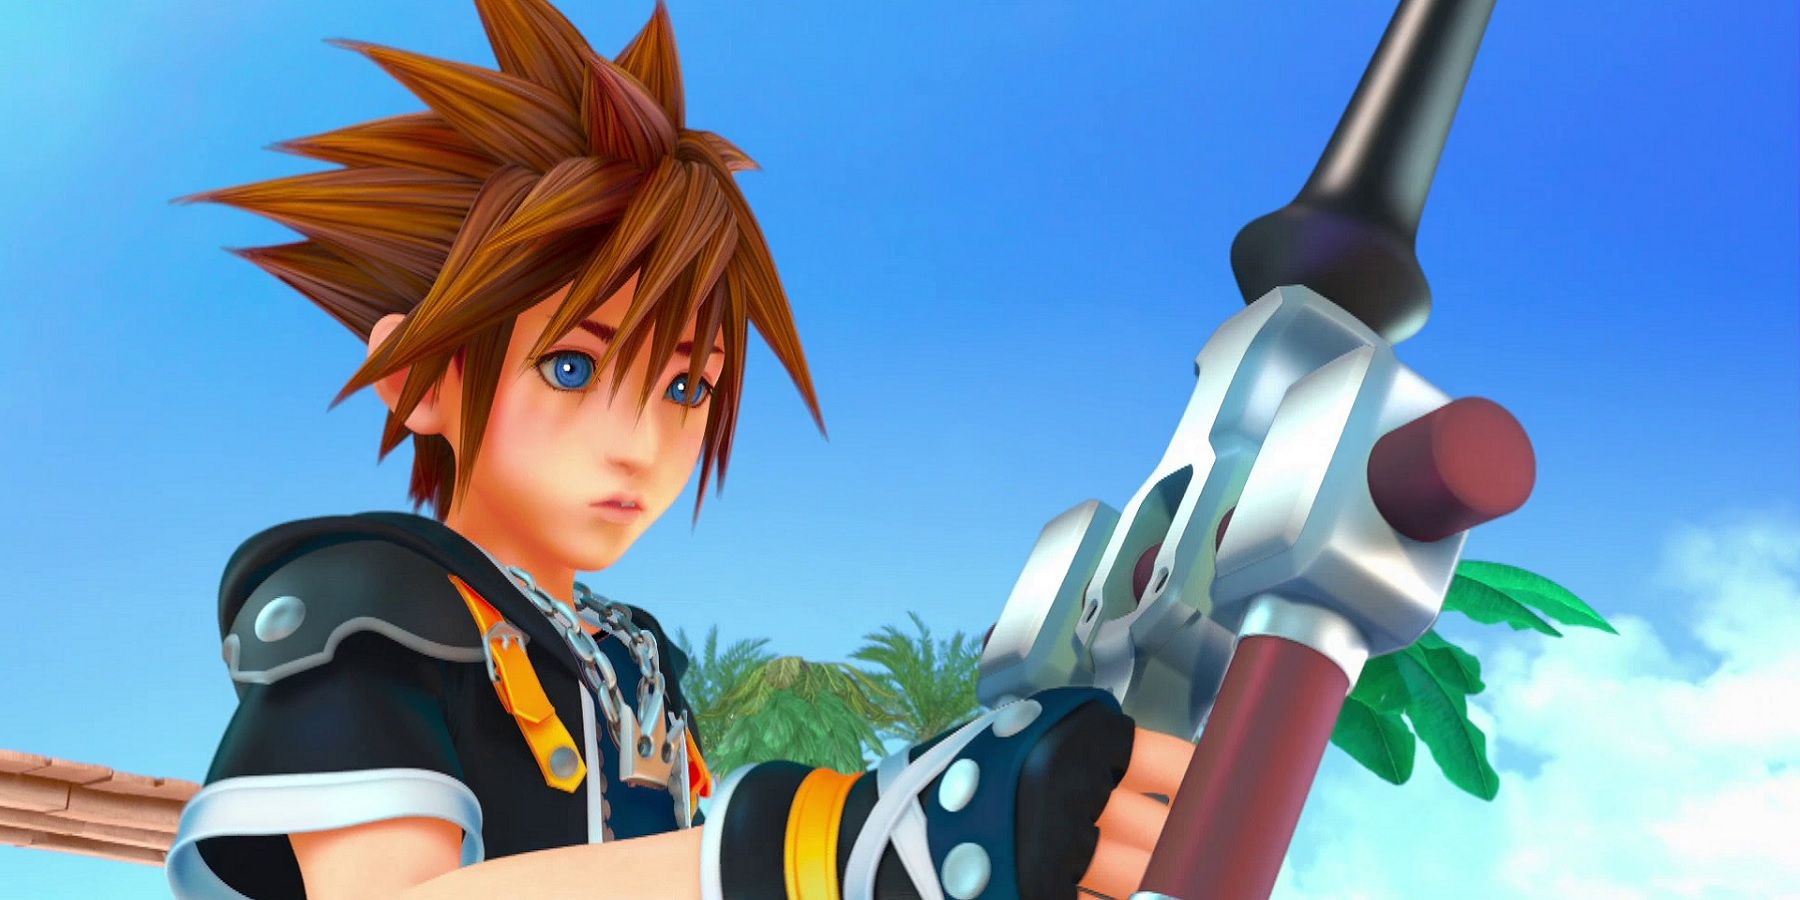 Super Smash Bros. Ultimate Final DLC Character vuotapaikkoja Soran Kingdom Hearts